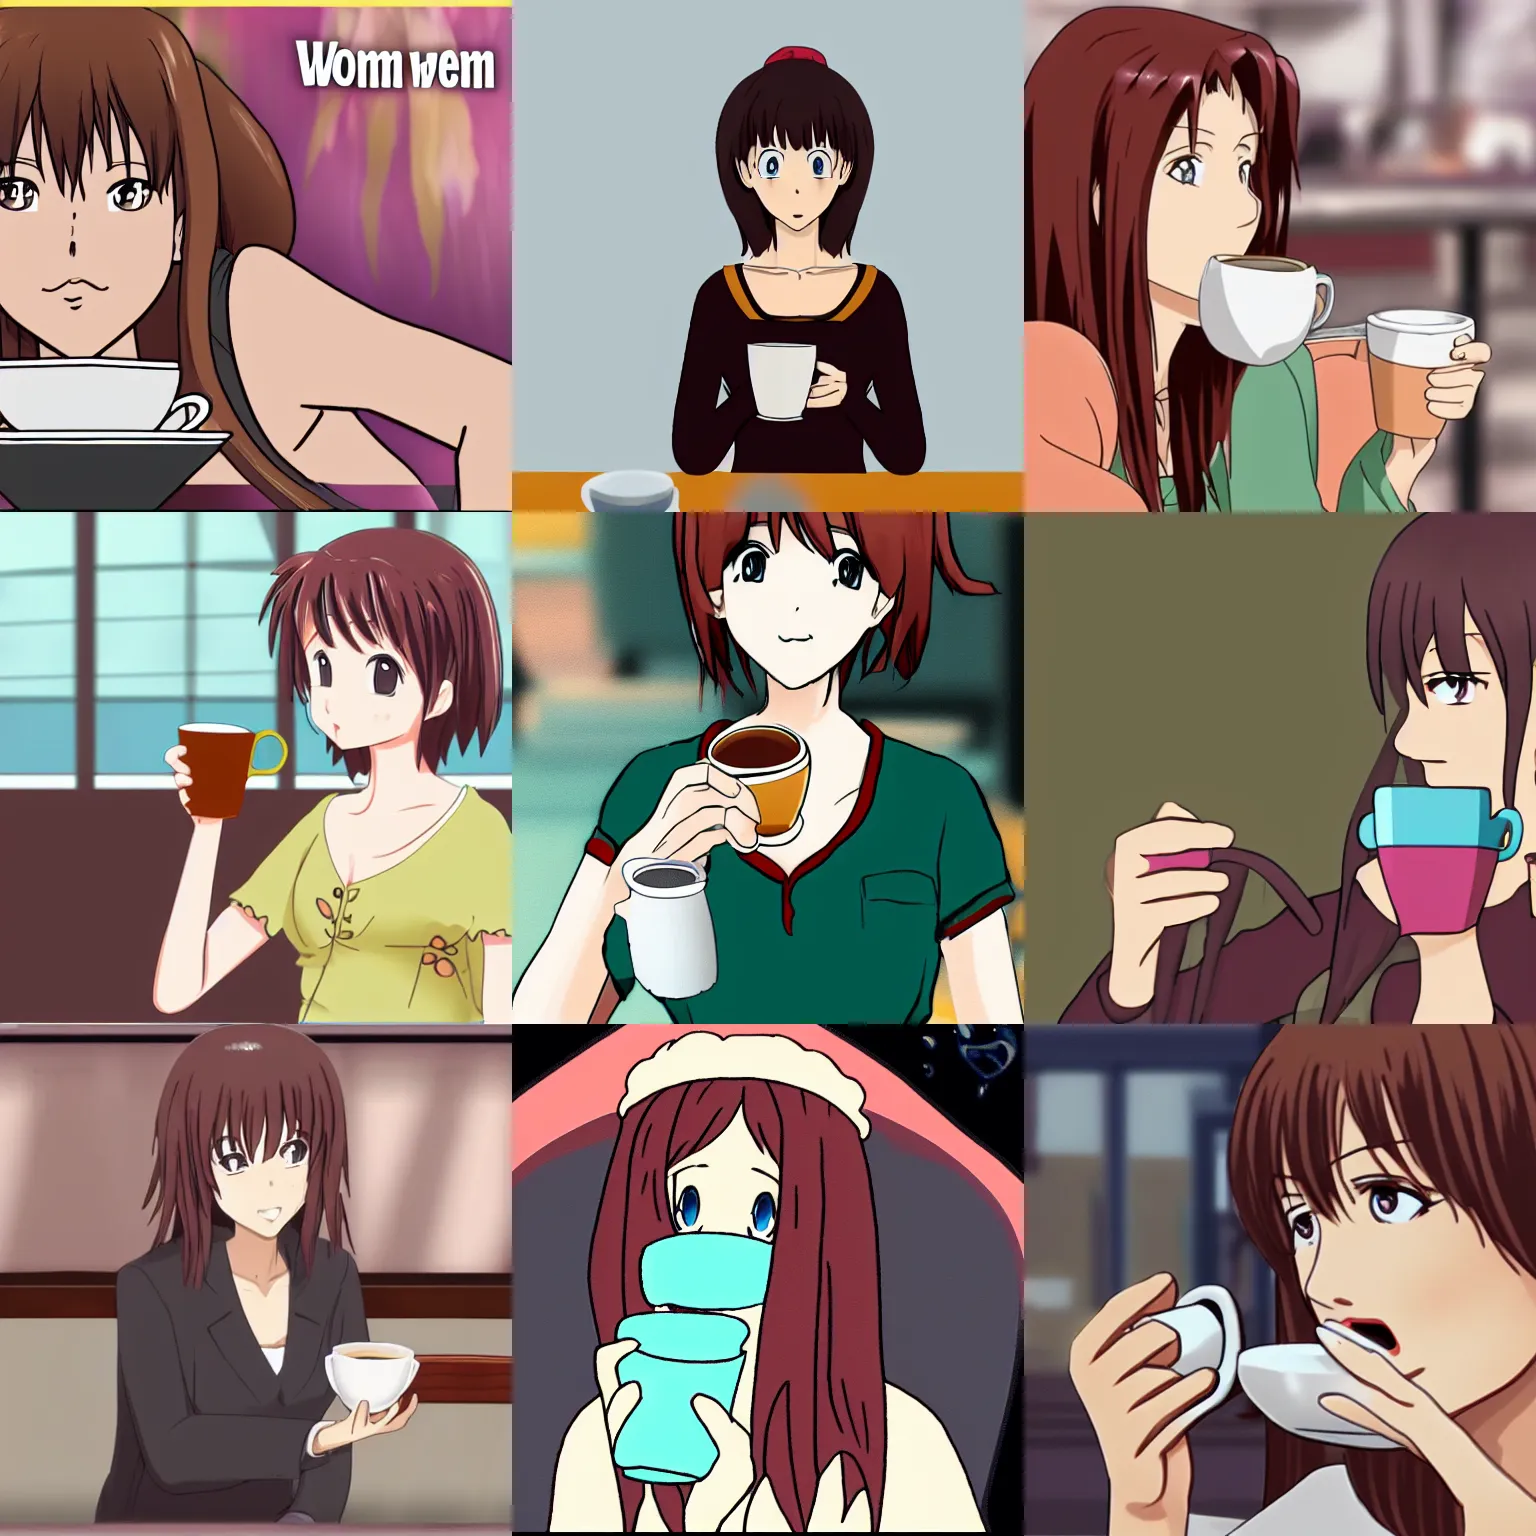 Prompt: Woman drinking coffee, anime screenshot